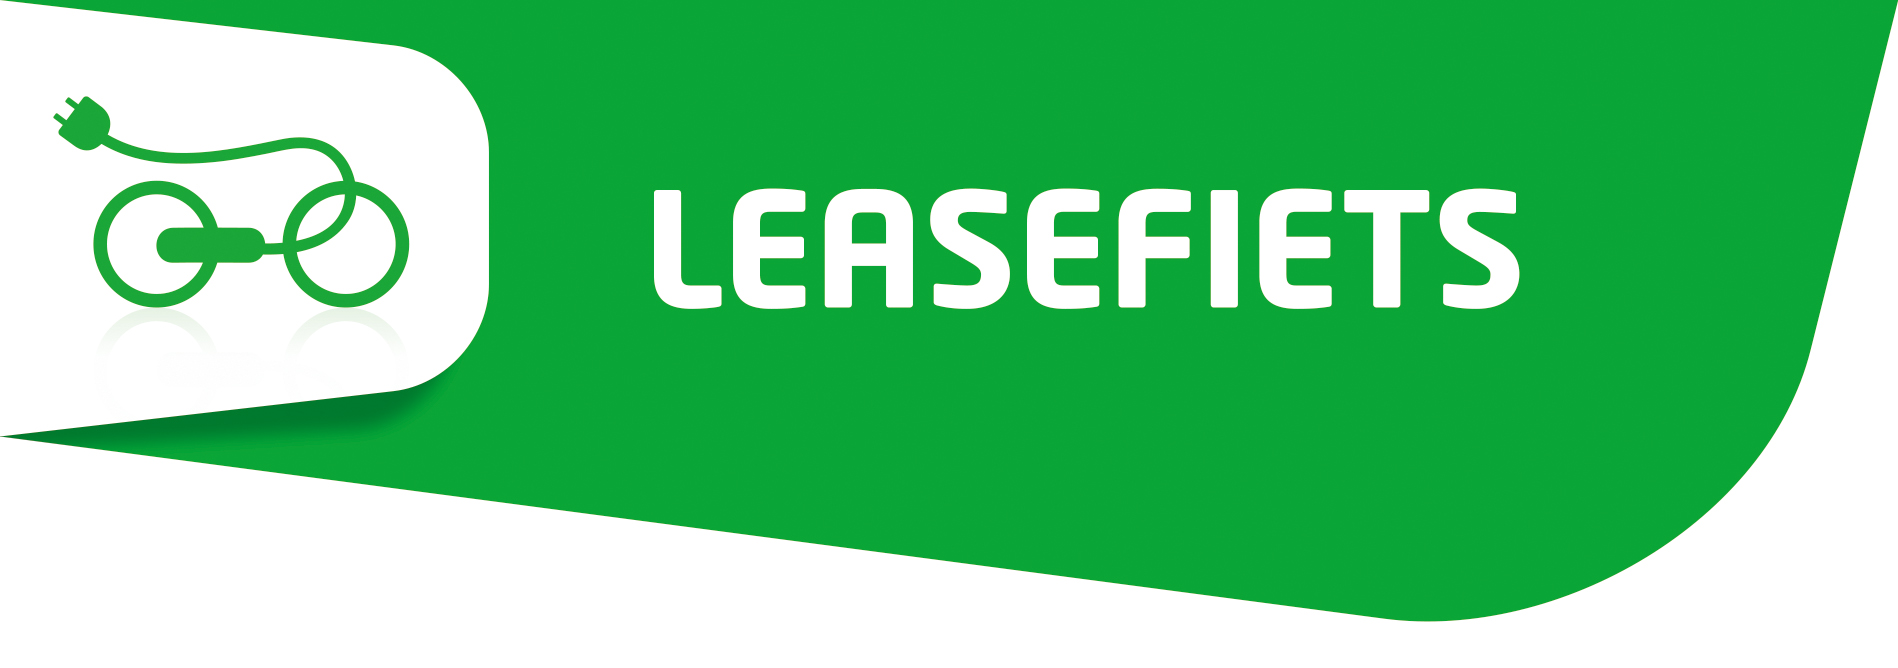 LeaseFiets logos